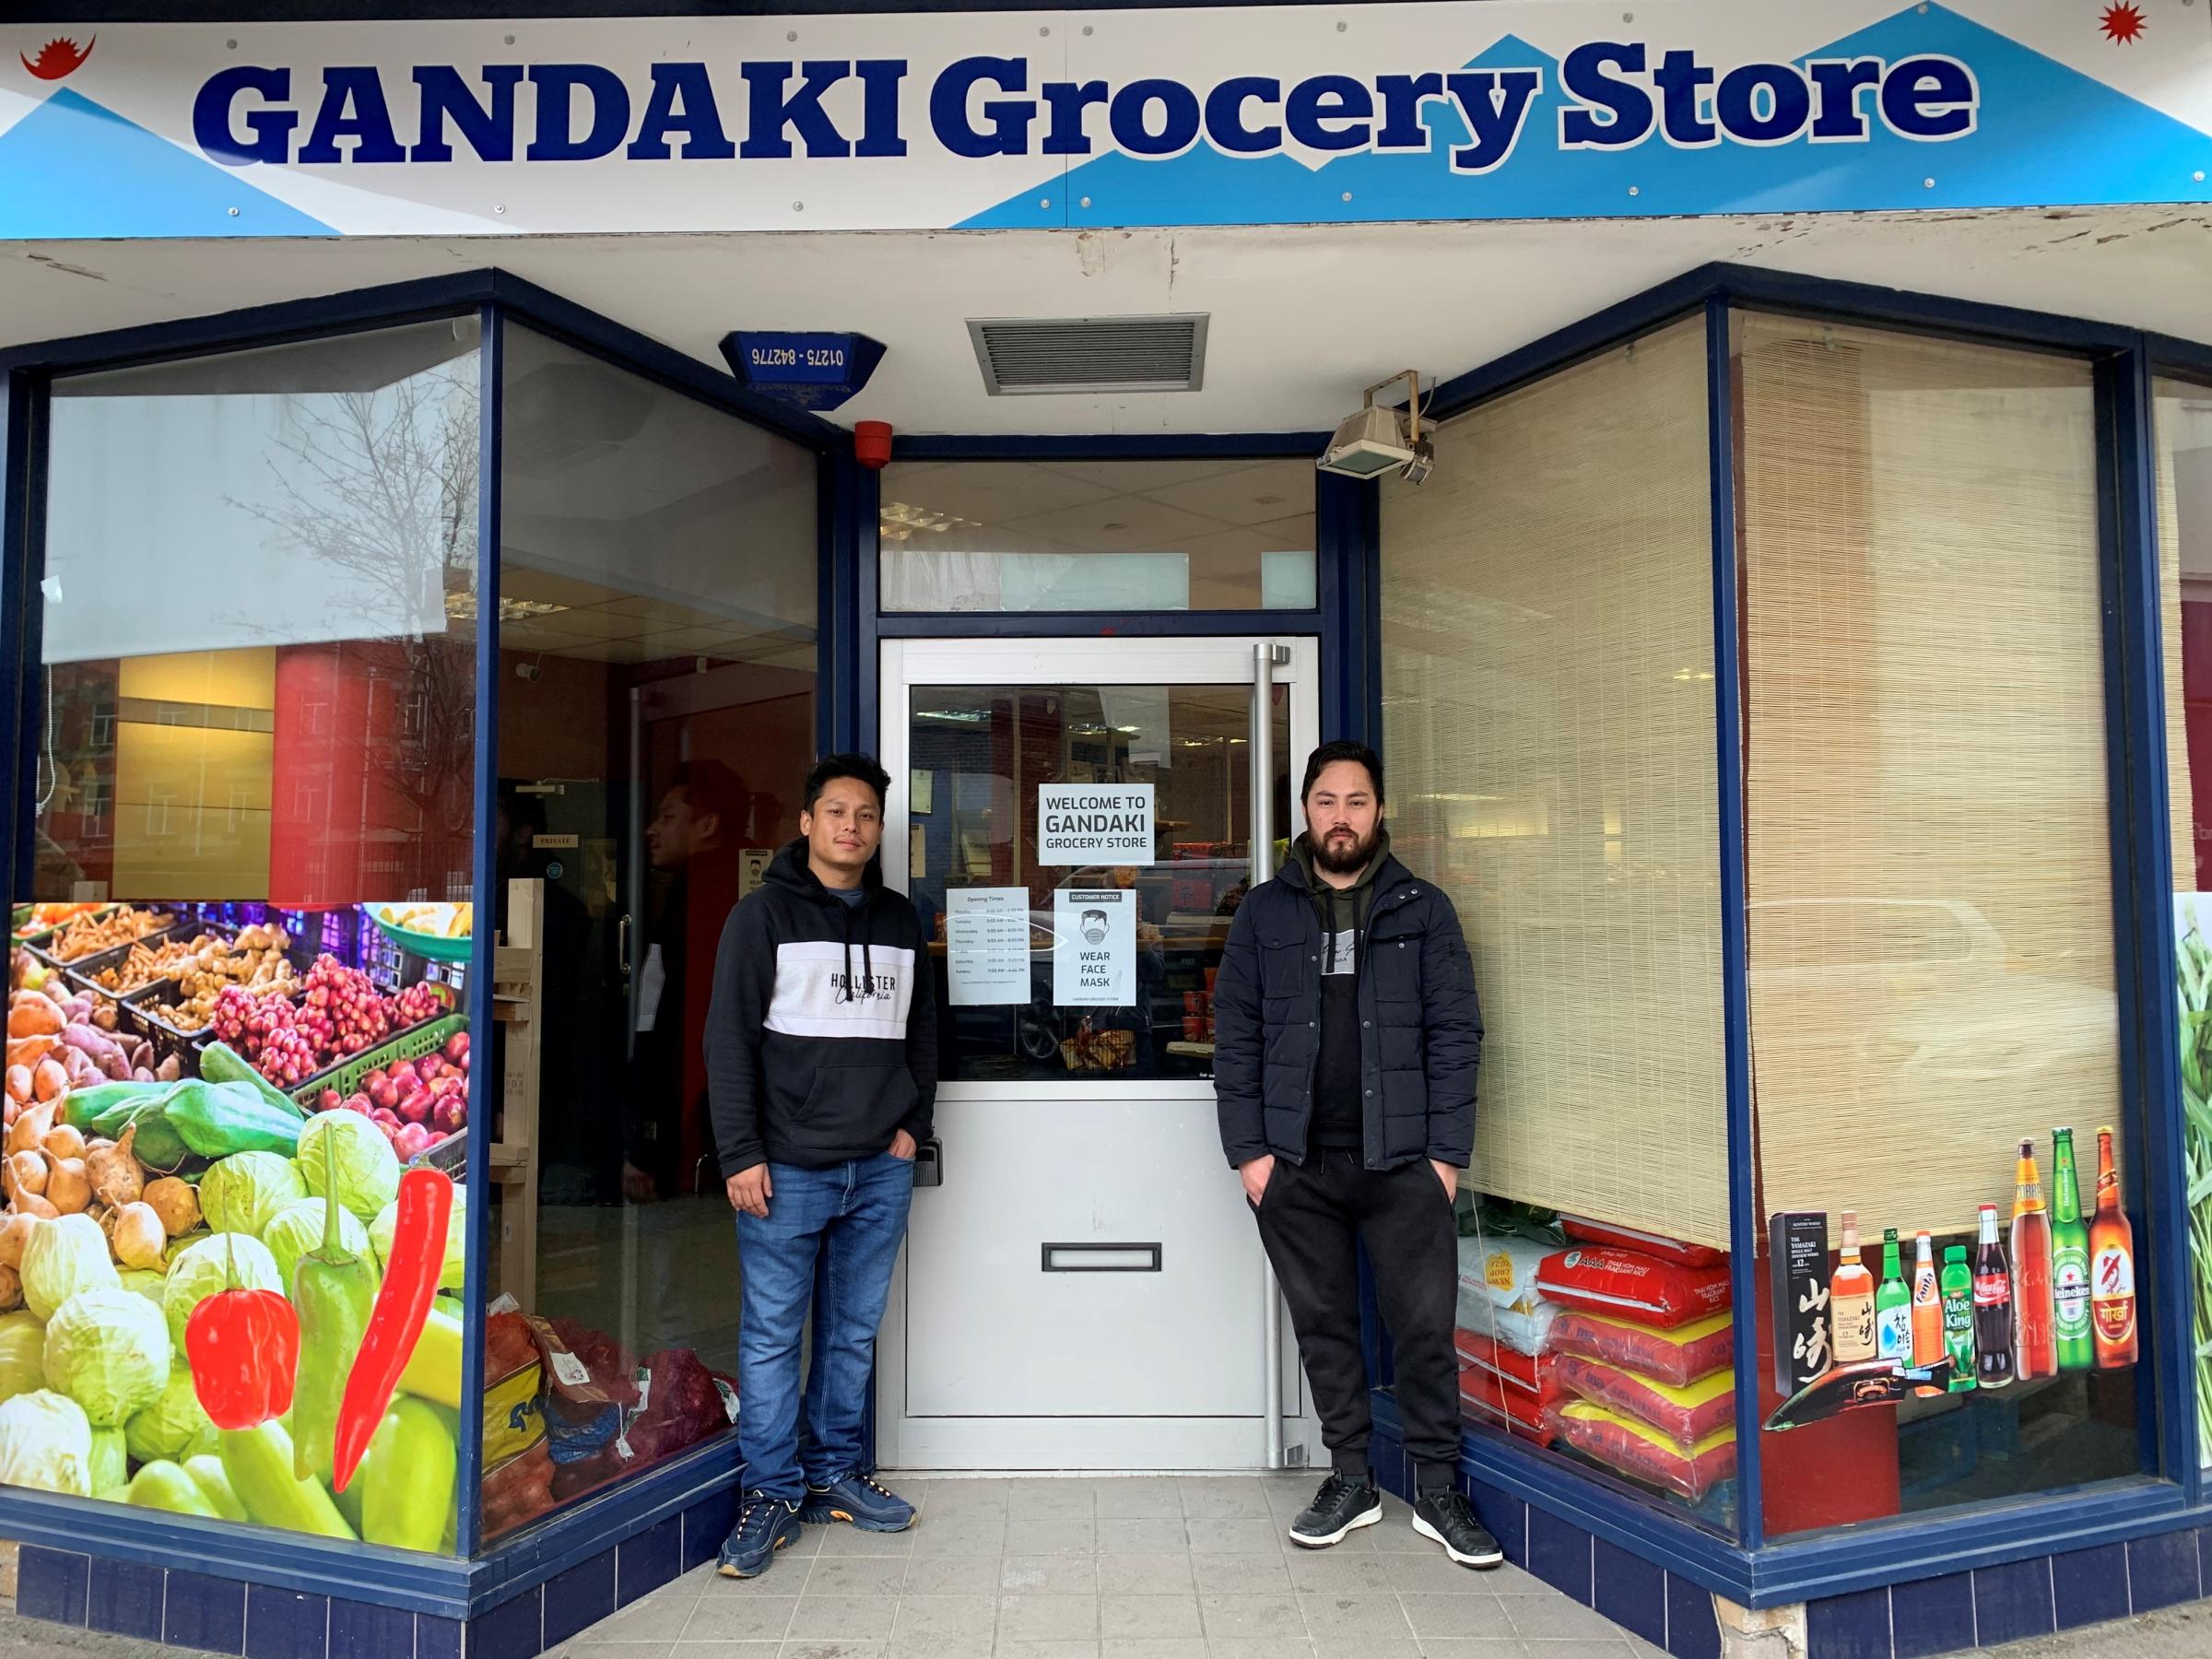 Kul Gaha and Ram Thapa at Gandaki Grocery Store on Sanford Street